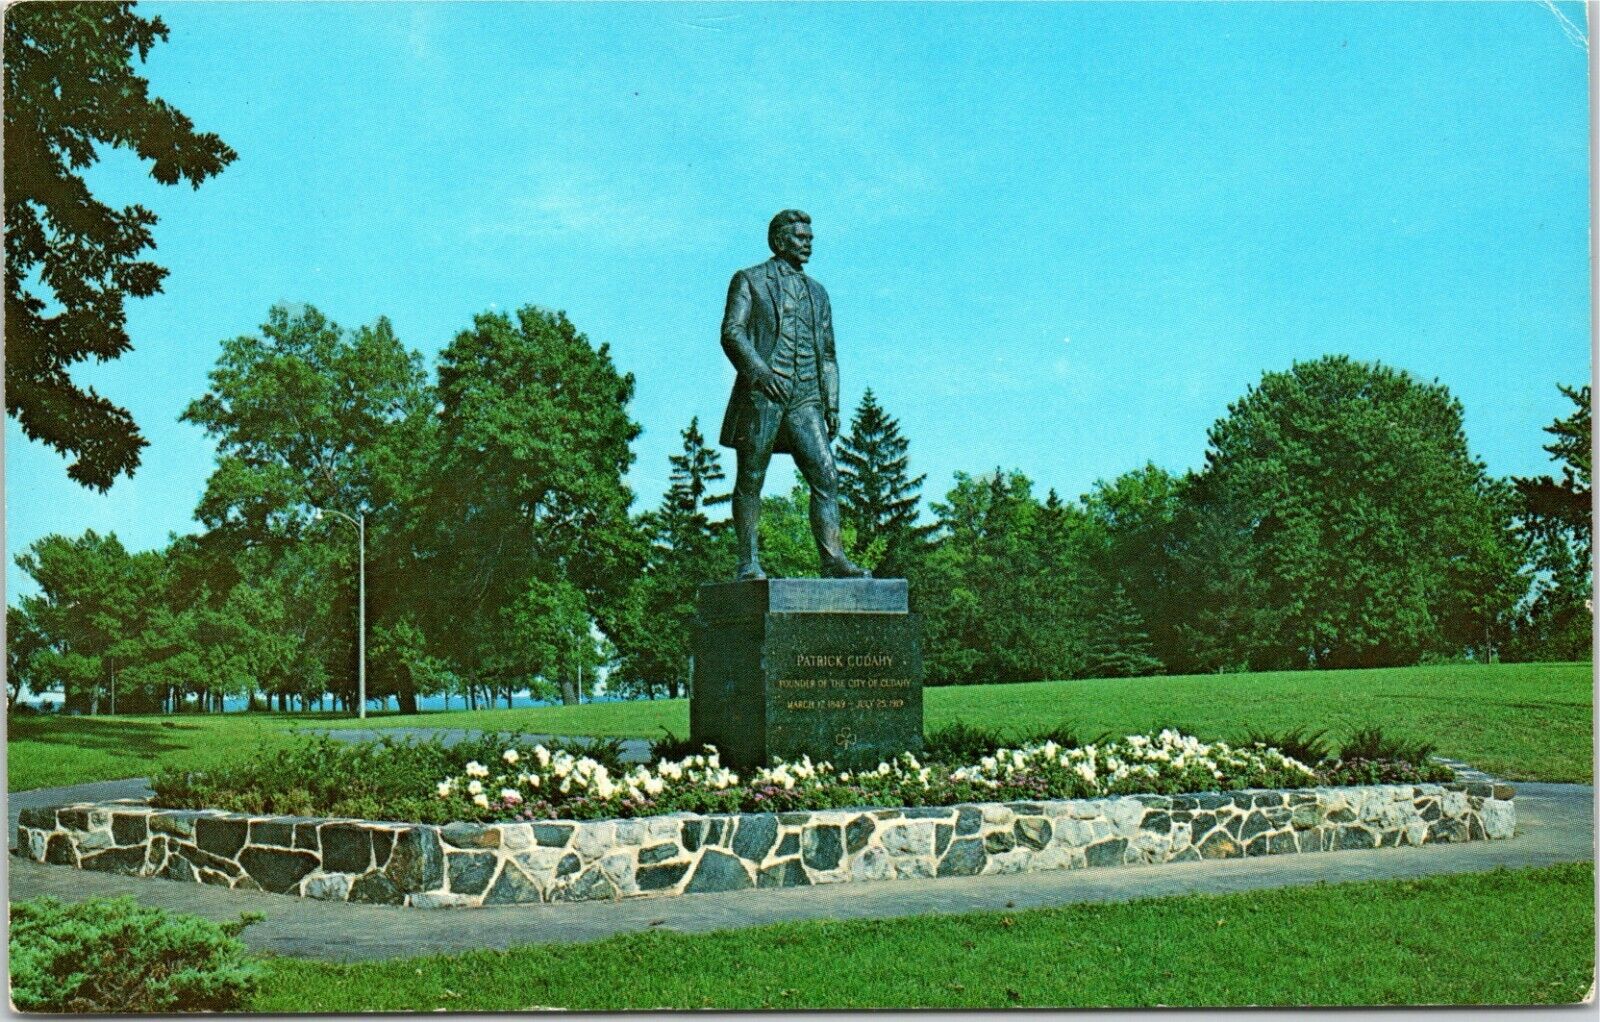 Patrick Cudahy statute in Sheridan Park - founder of Cudahy Wisconsin